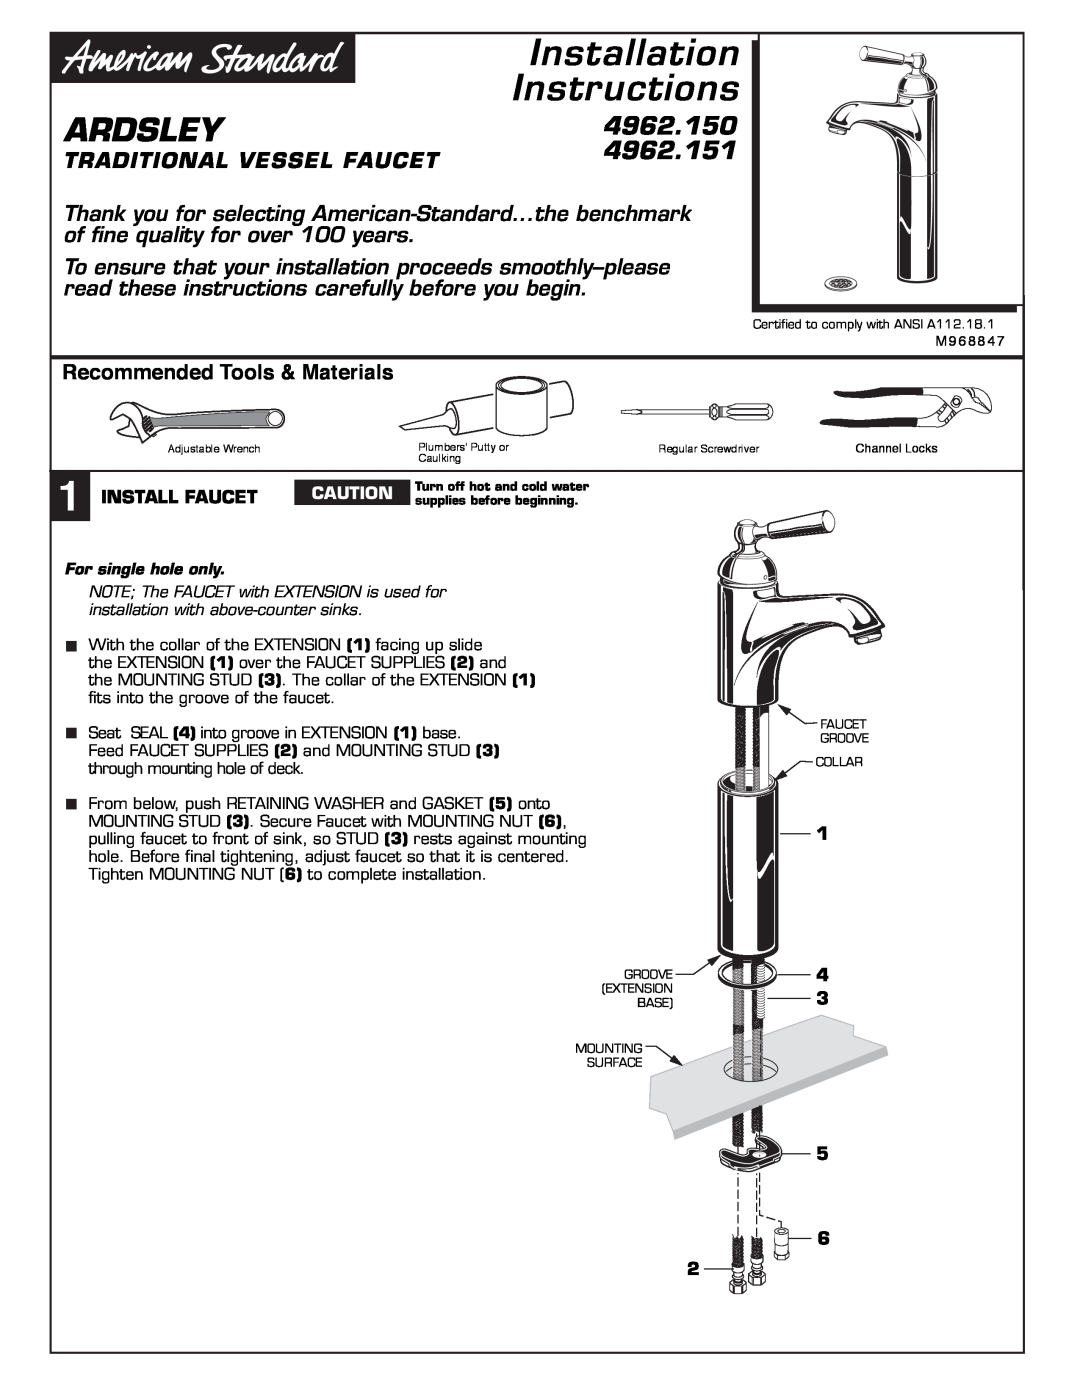 American Standard 4962.151 installation instructions Installation, Instructions, Ardsley, 4962.150 